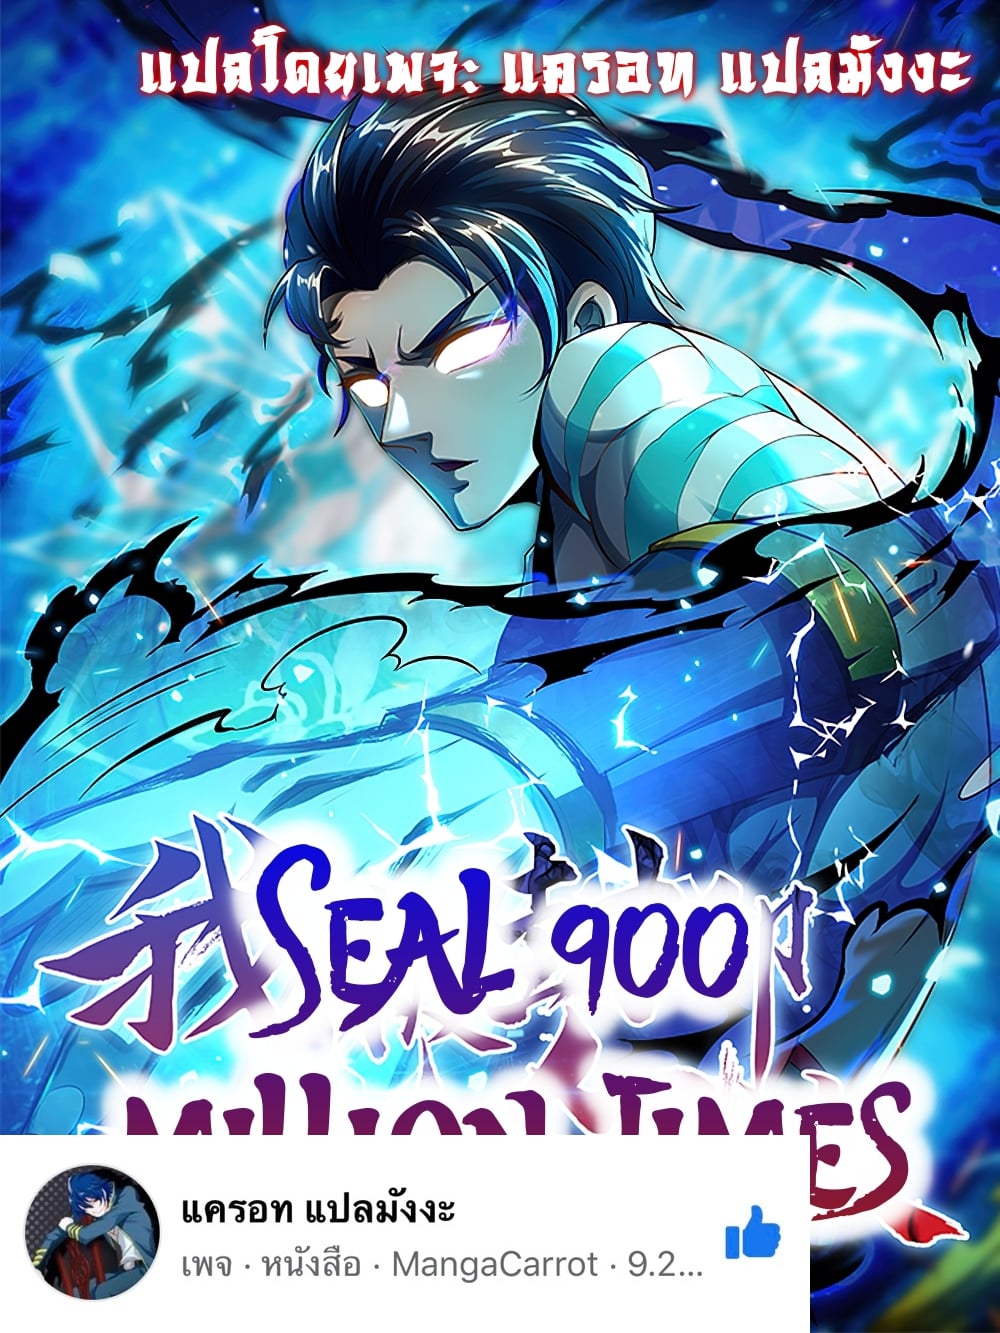 I was sealed 900 million times 20 (1)